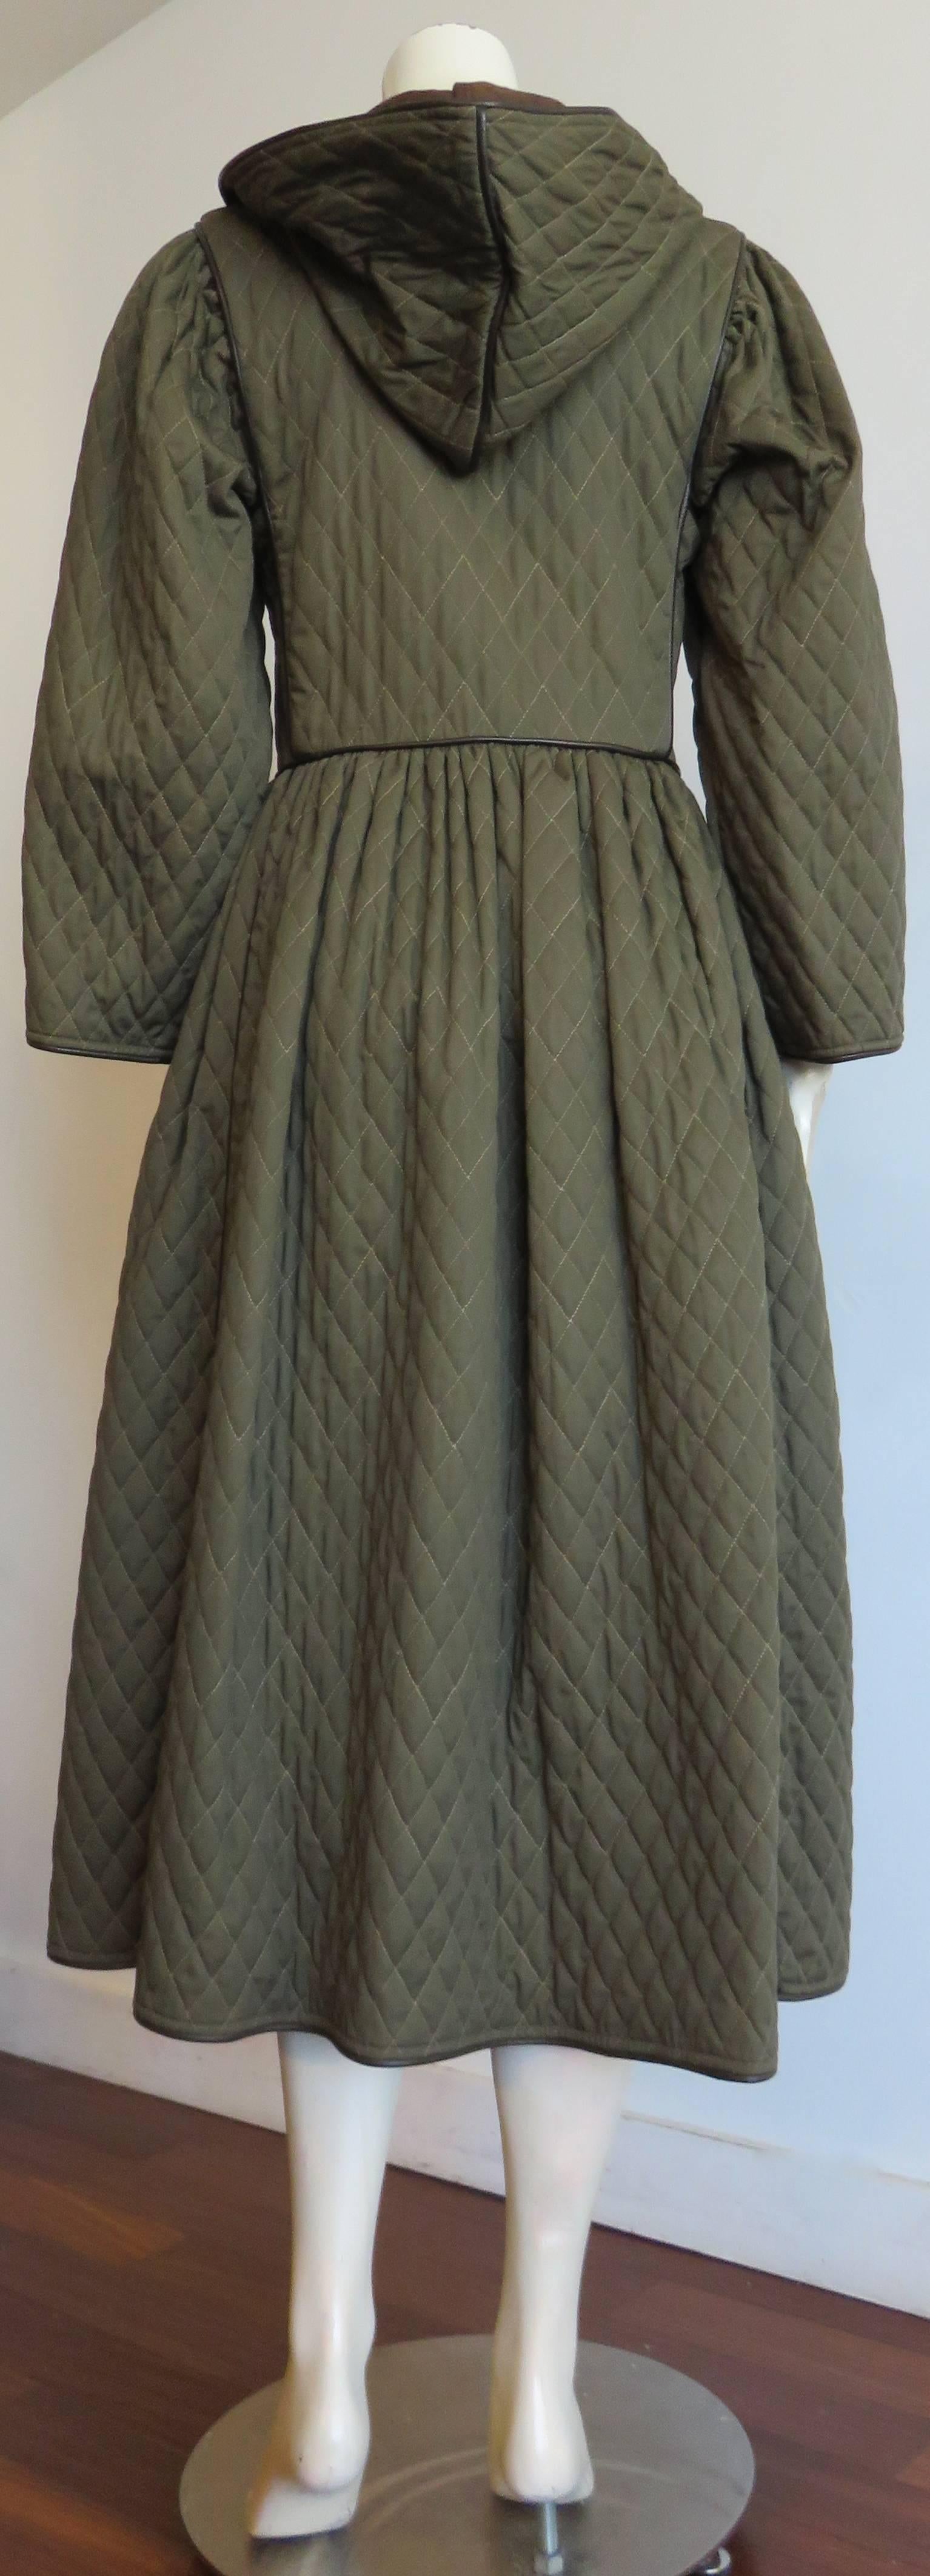 Women's 1970's SAINT LAURENT Iconic quilted coat dress For Sale